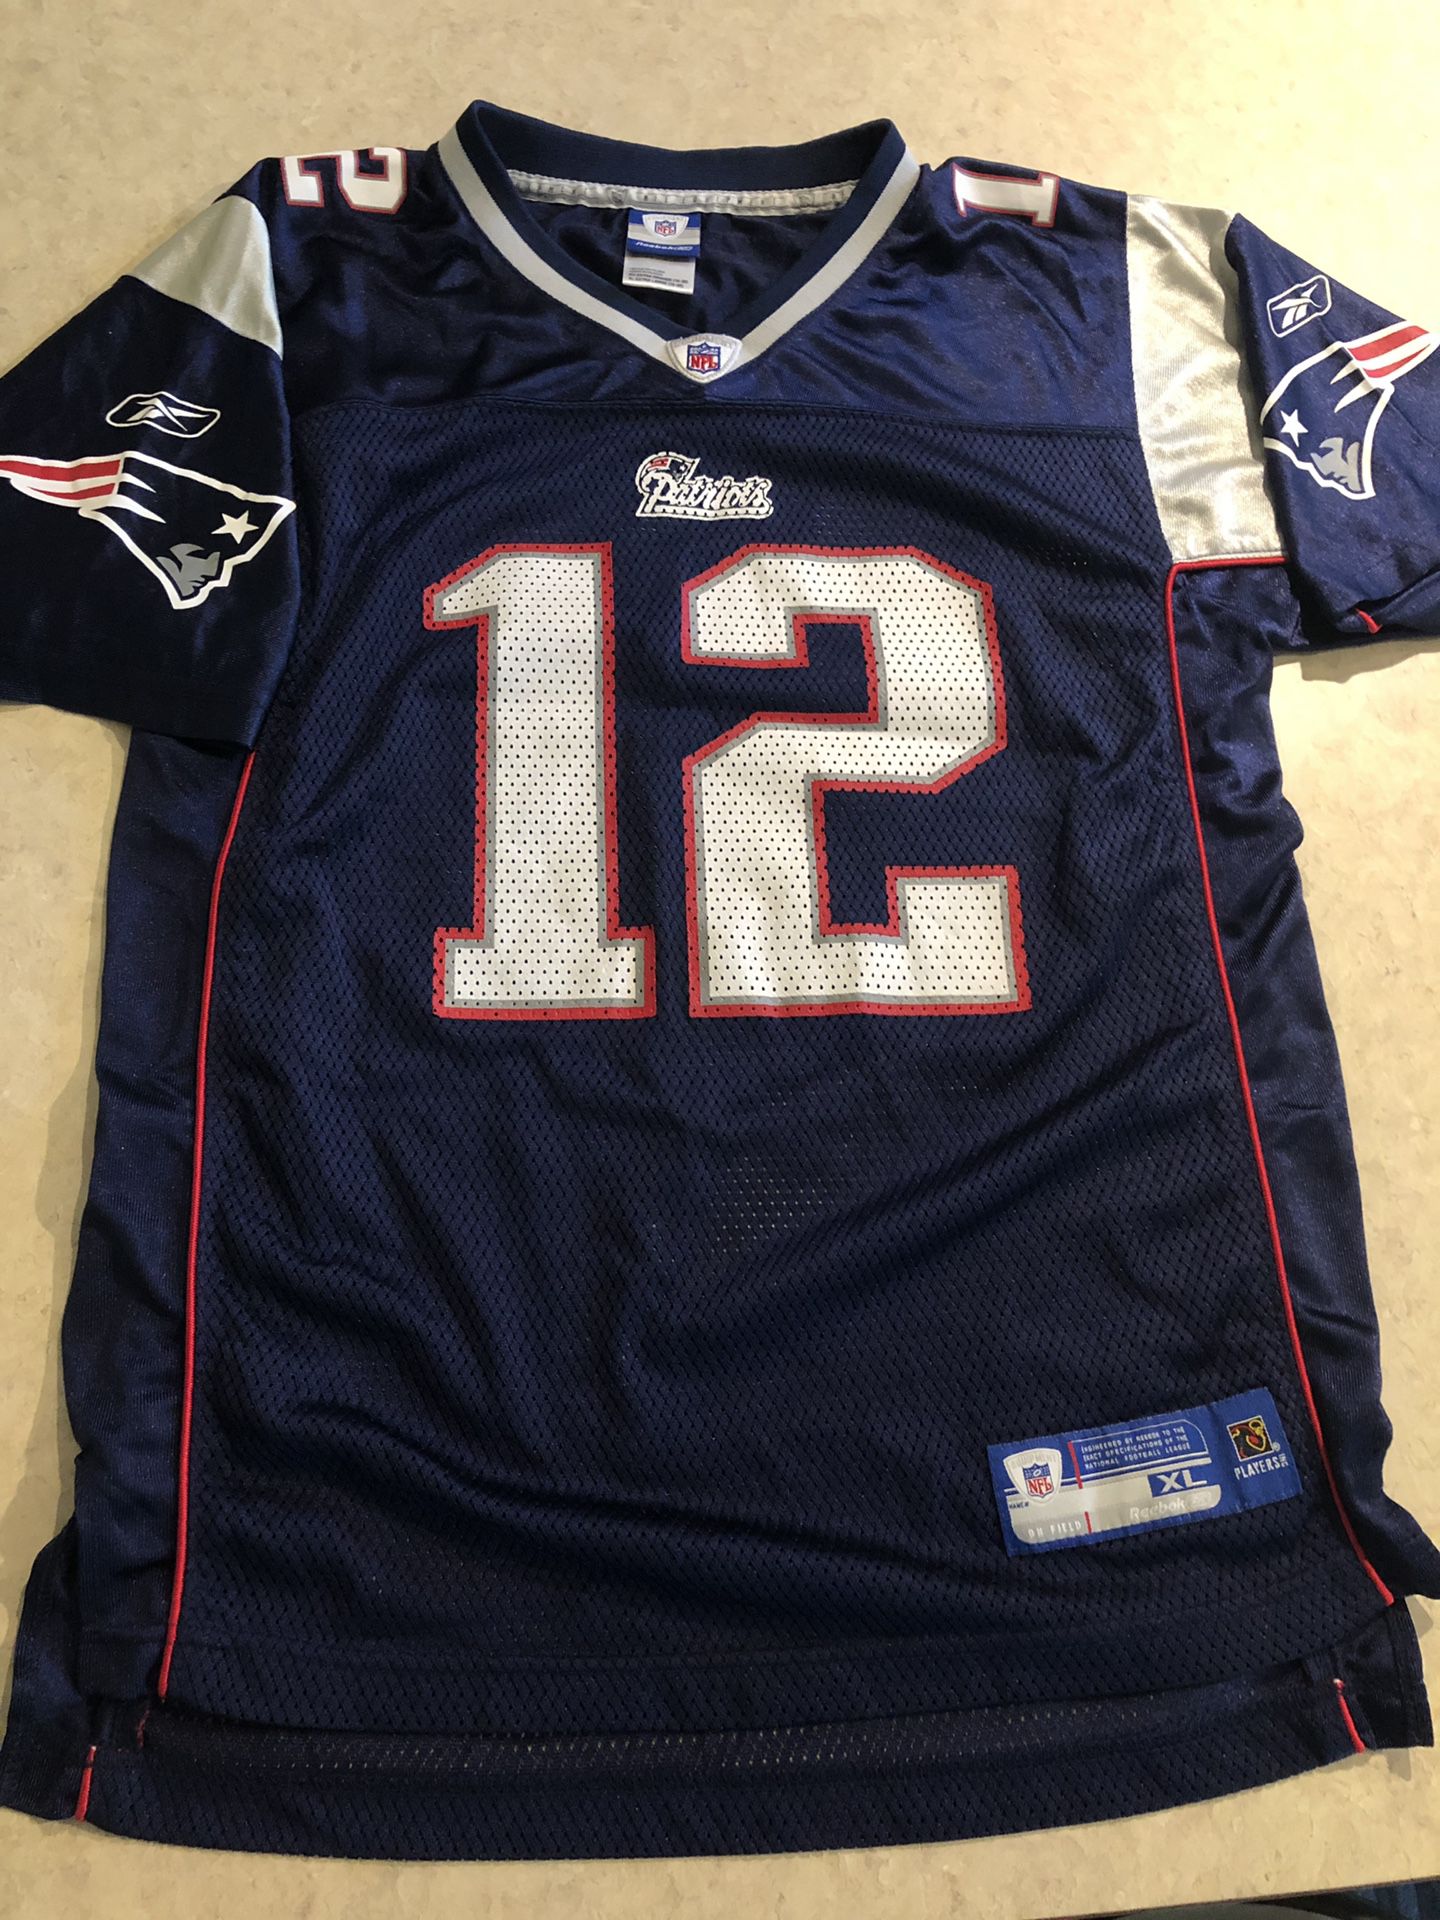 Reebok New England Patriots jersey YXL (18-20)